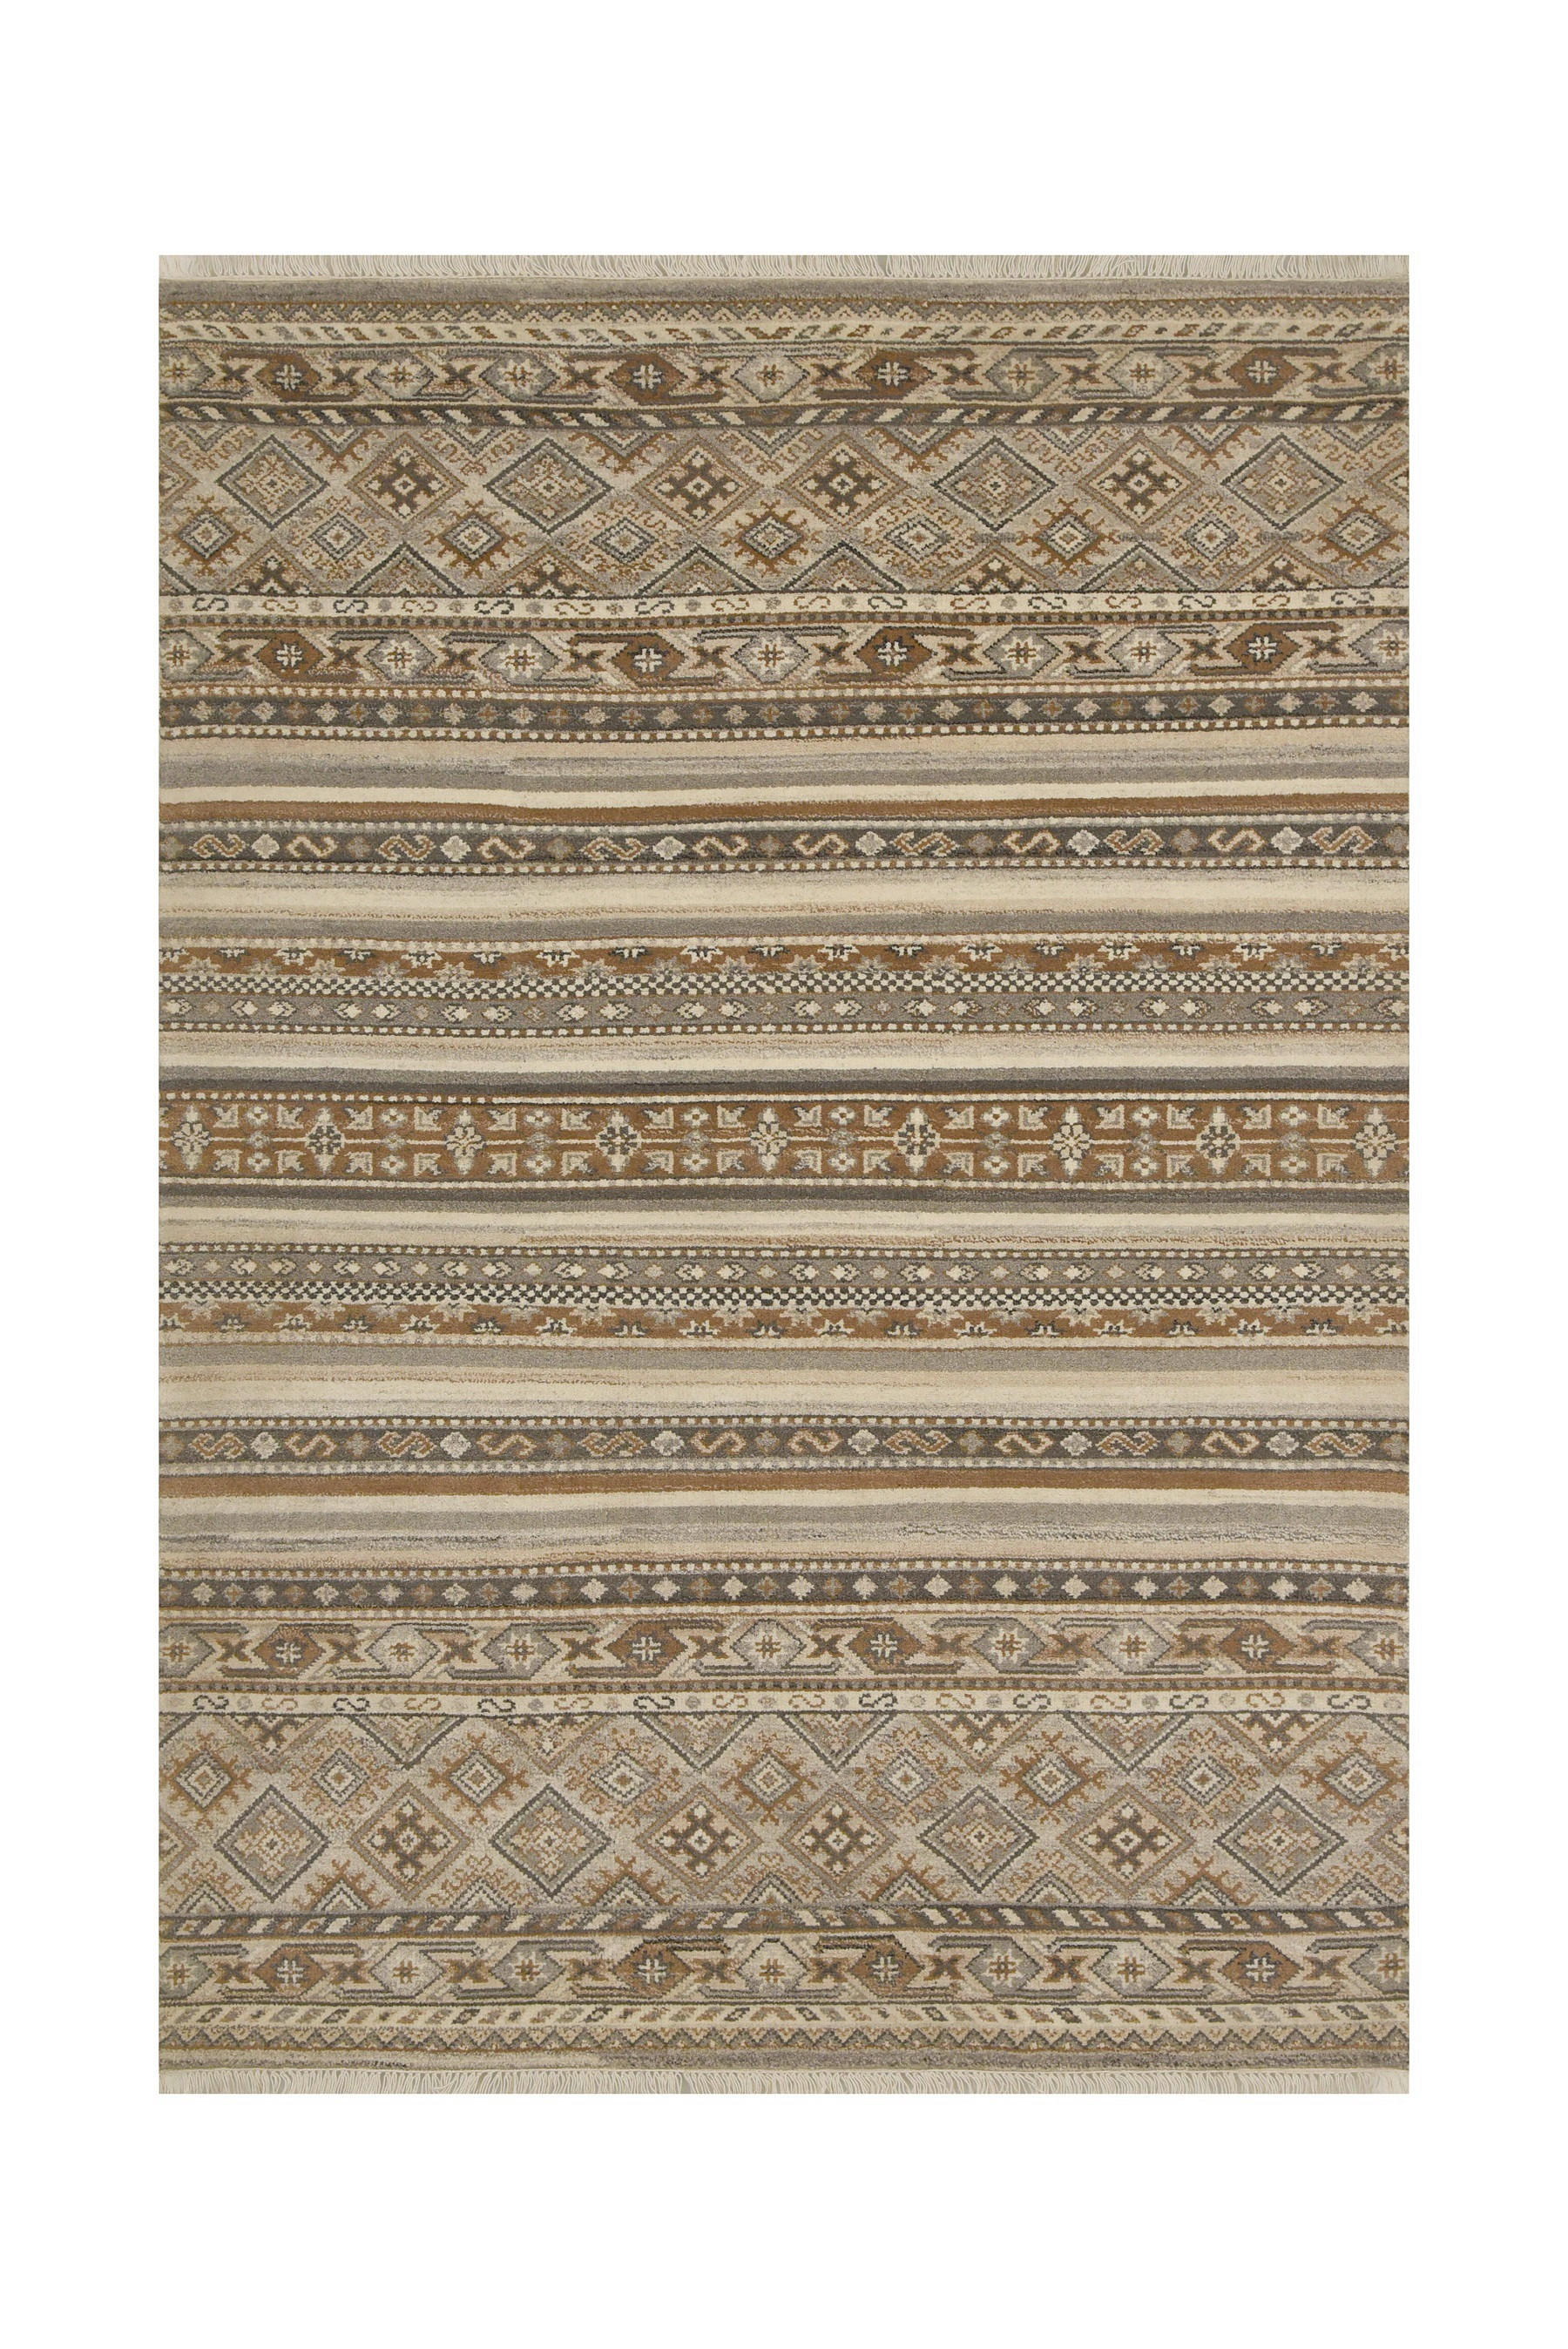 ORIENTALISK MATTA Kazak Exklusiv  EDITION KAZAK EXCL  - multicolor, Lifestyle, textil (200cm) - Cazaris